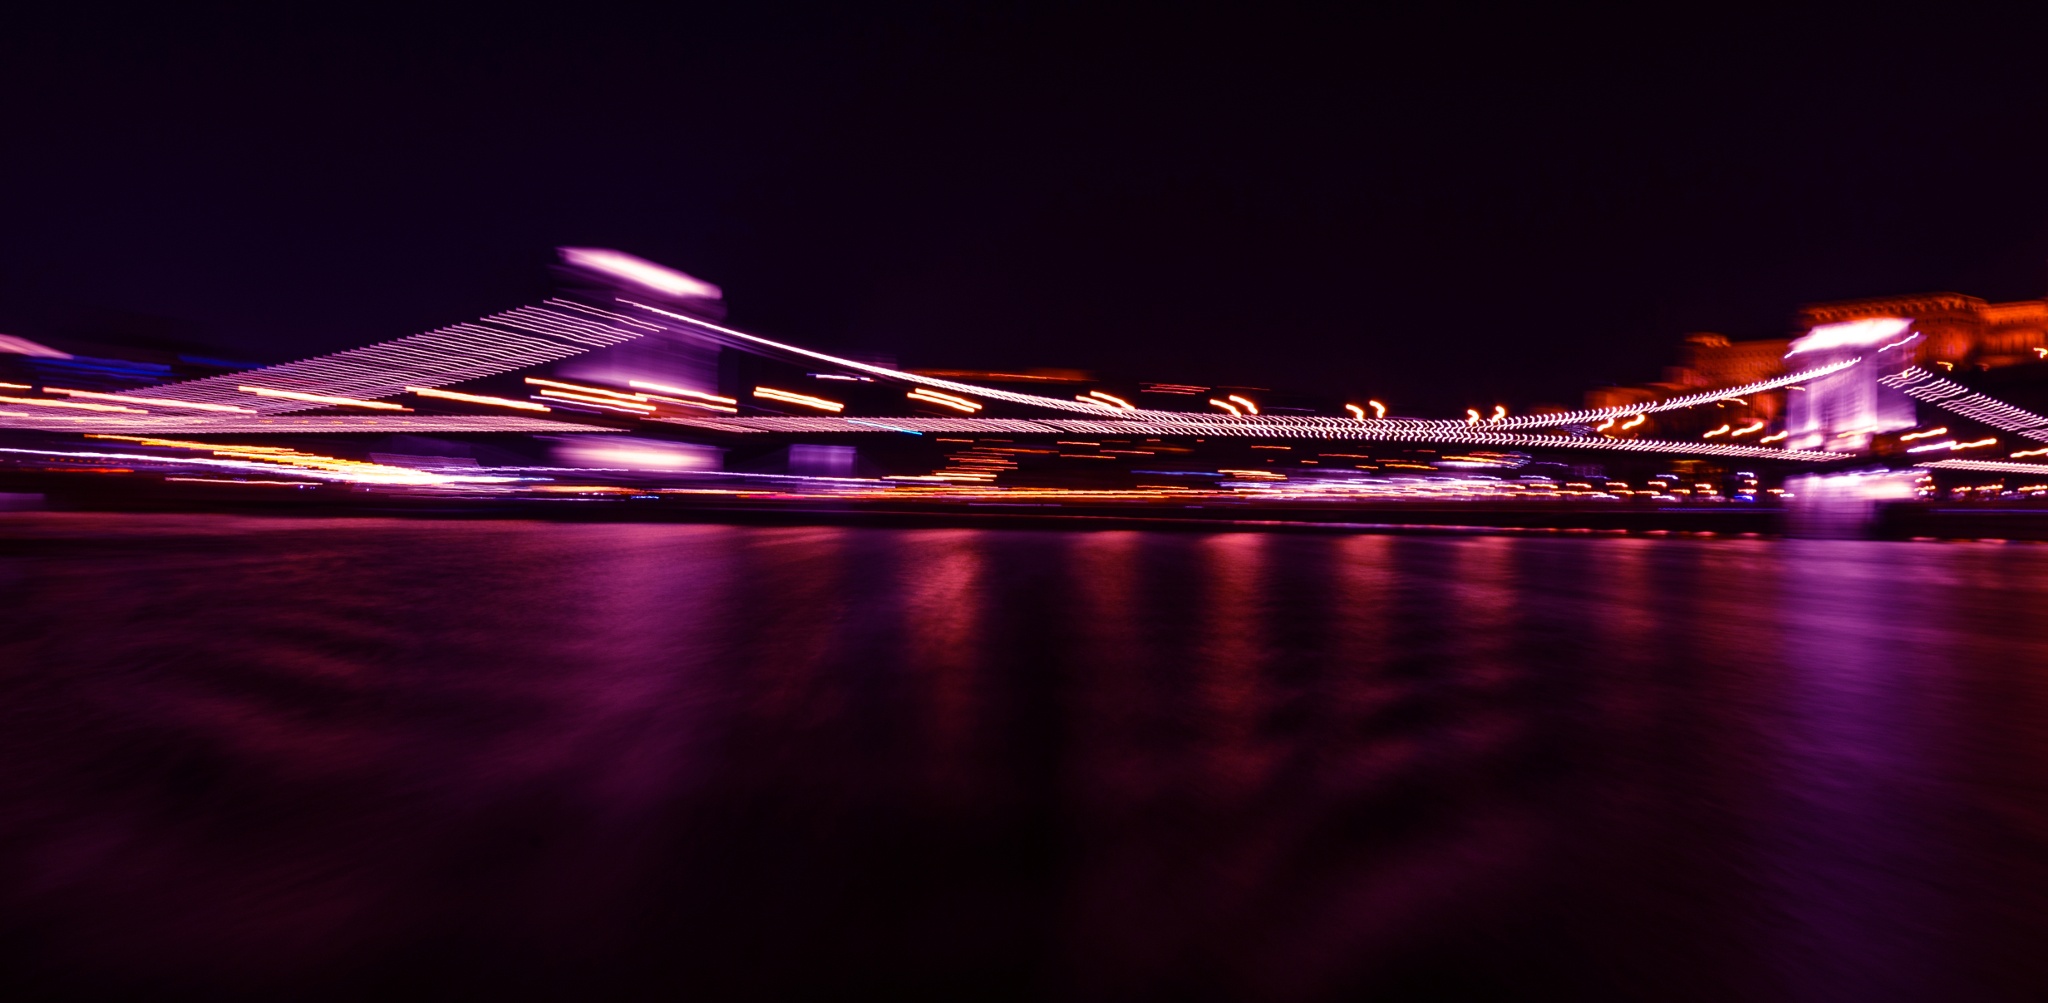 The Chain Bridge of light, Blur, Bridge, Light, Purple, HQ Photo